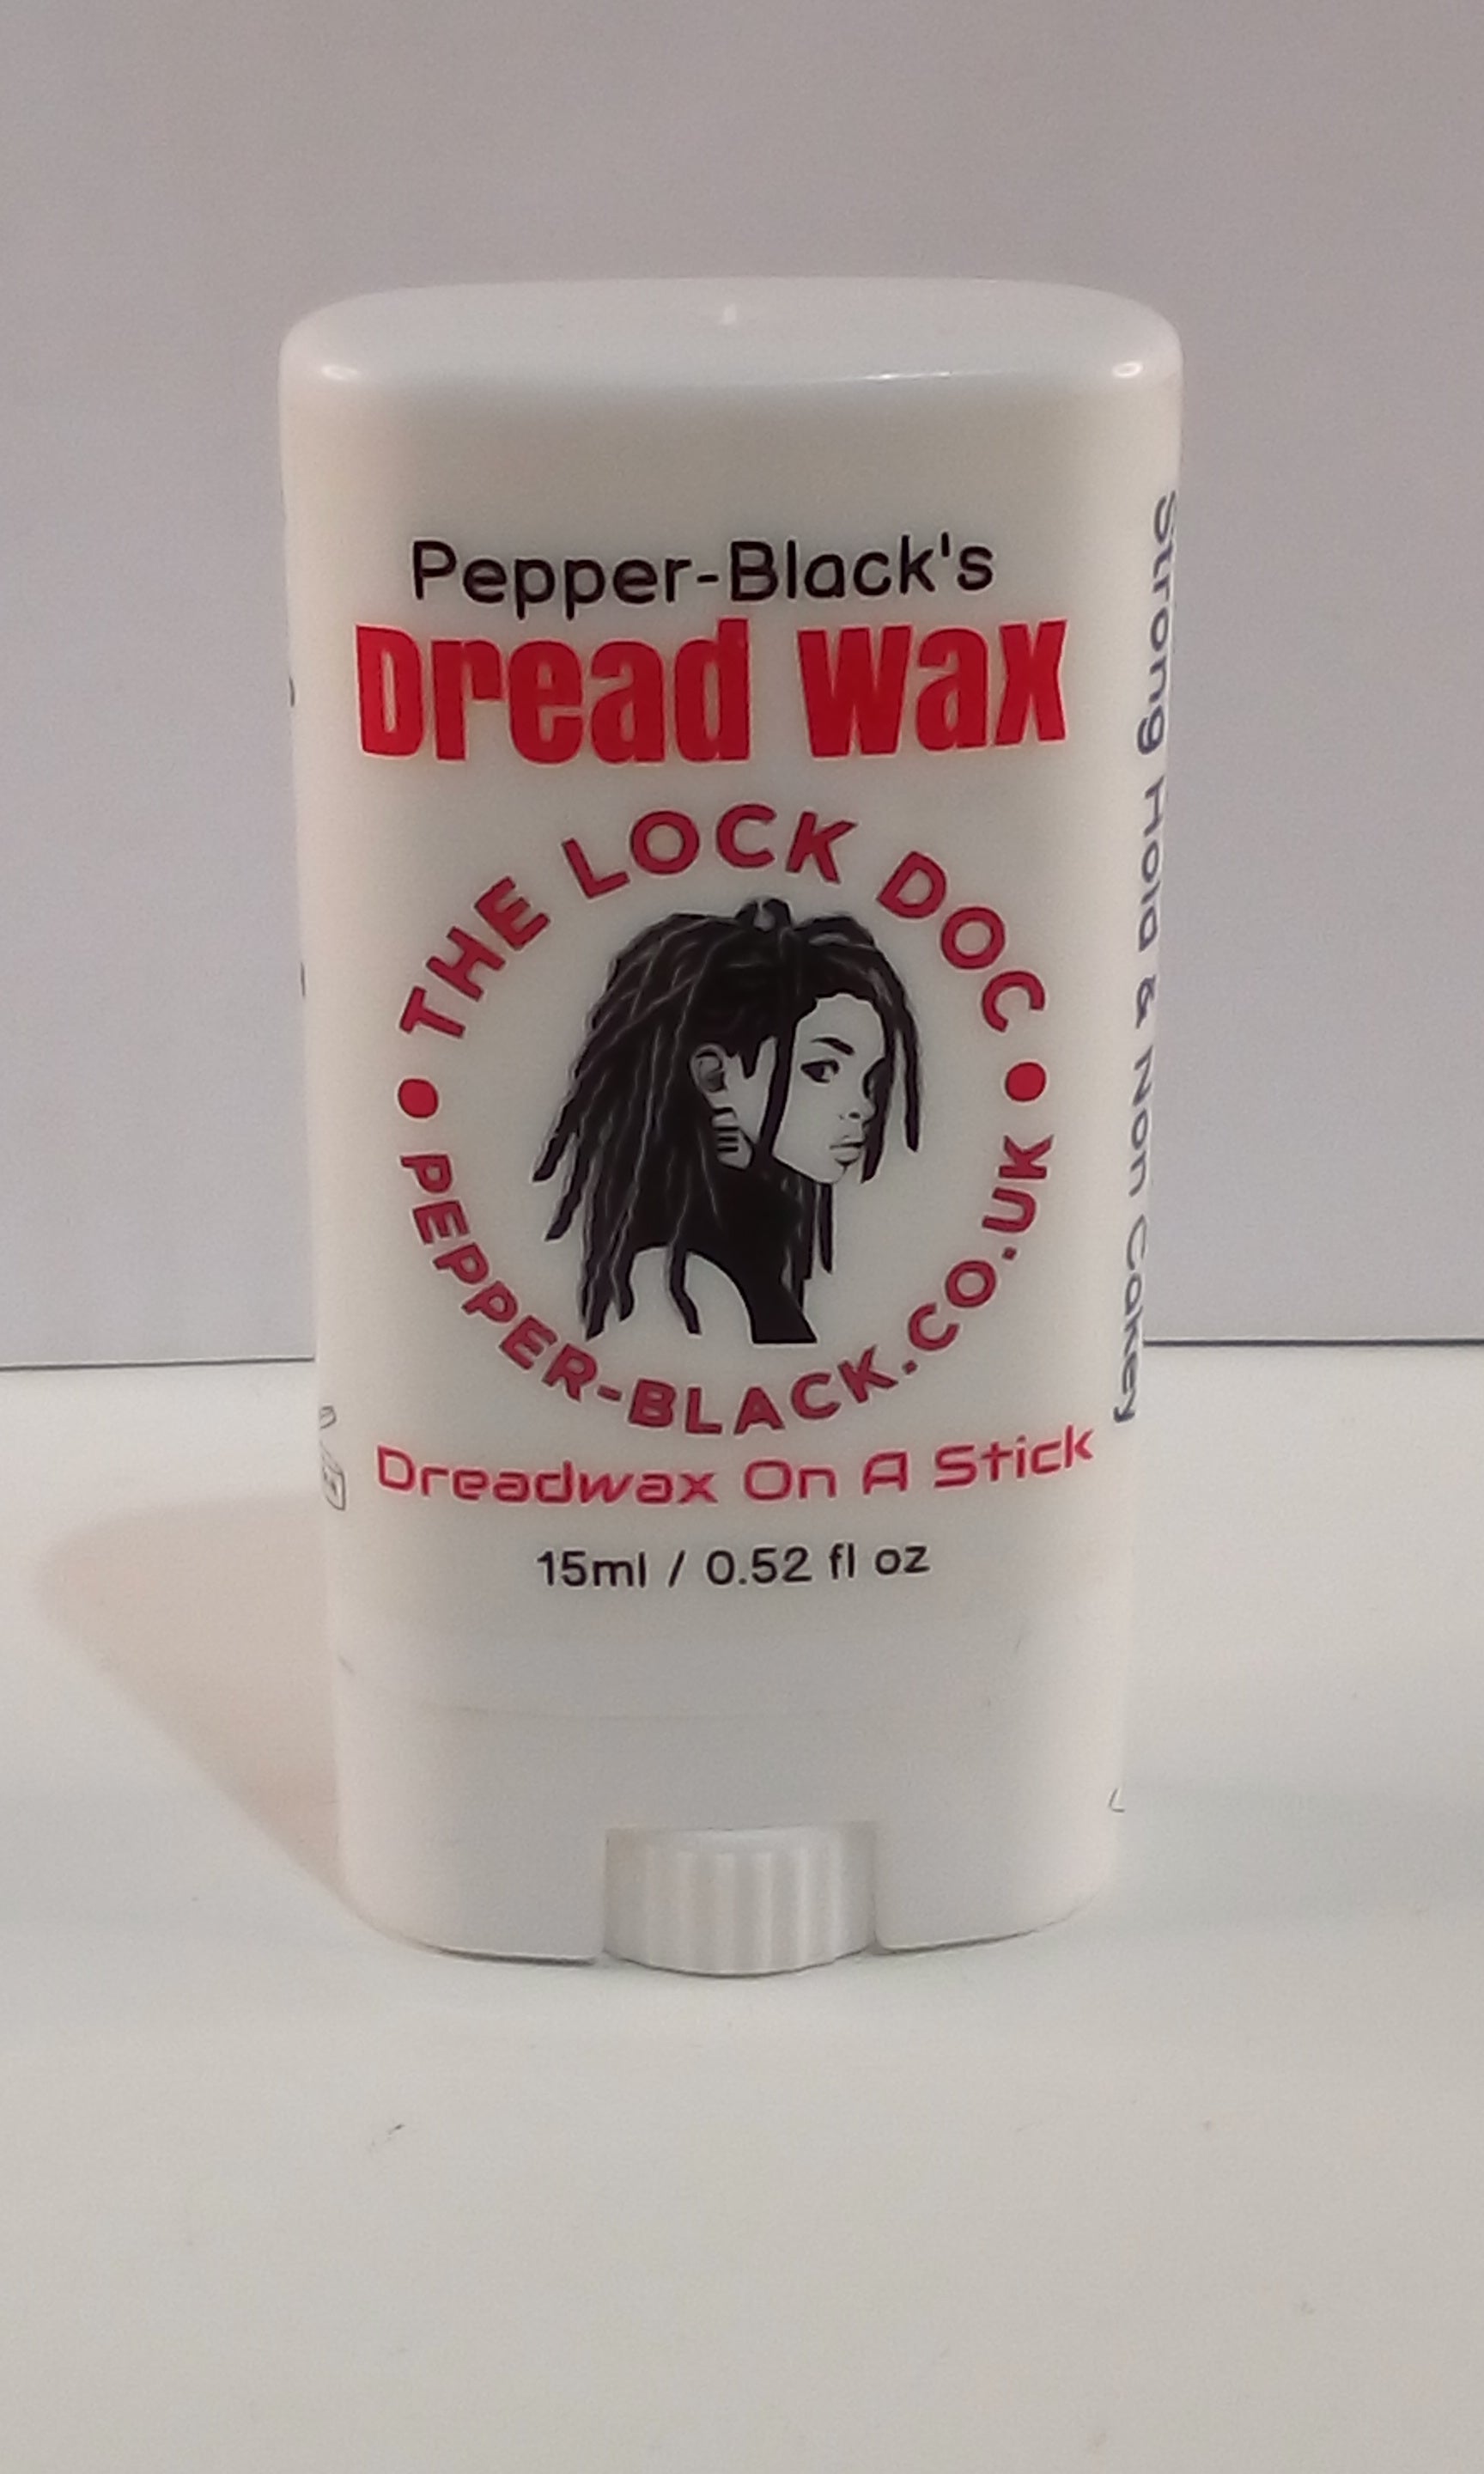 roll-on-dreadlocks- dreadwax-pepper-black-close-up